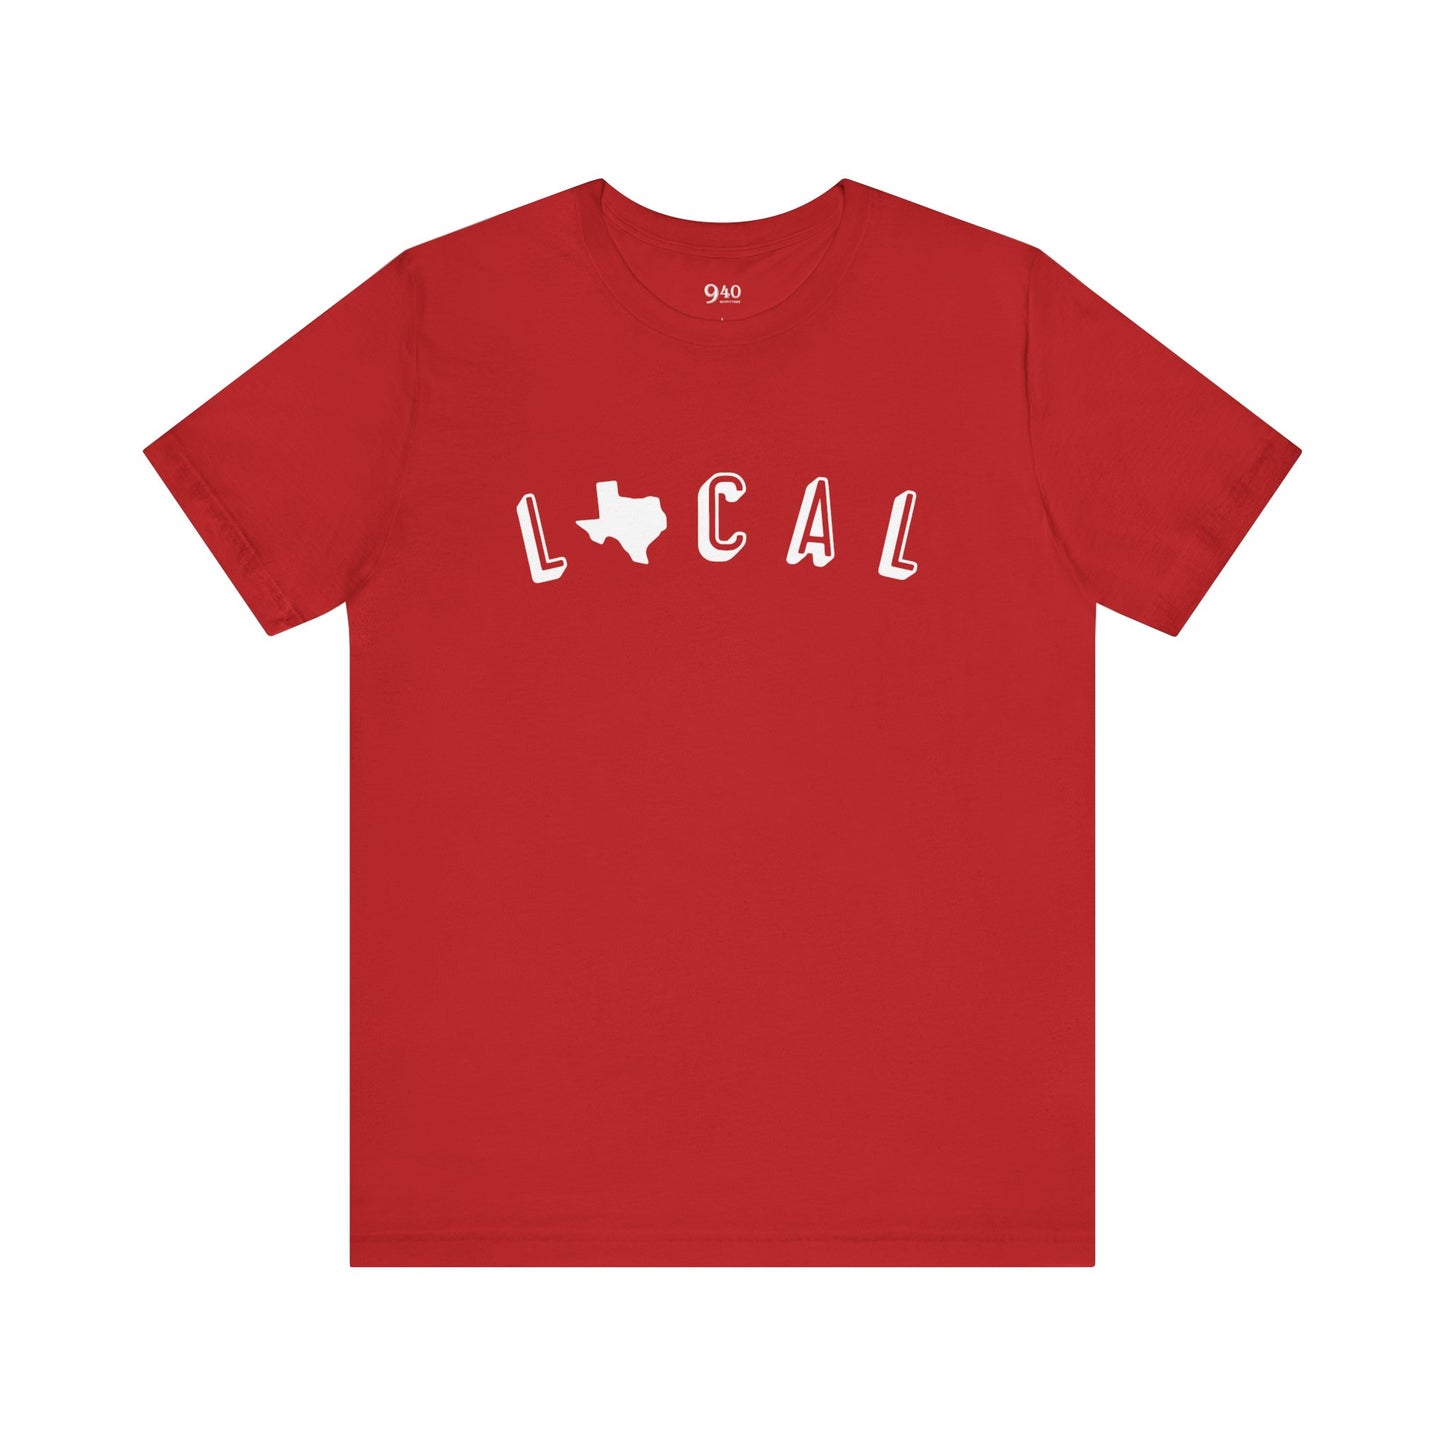 Camiseta unisex texana local